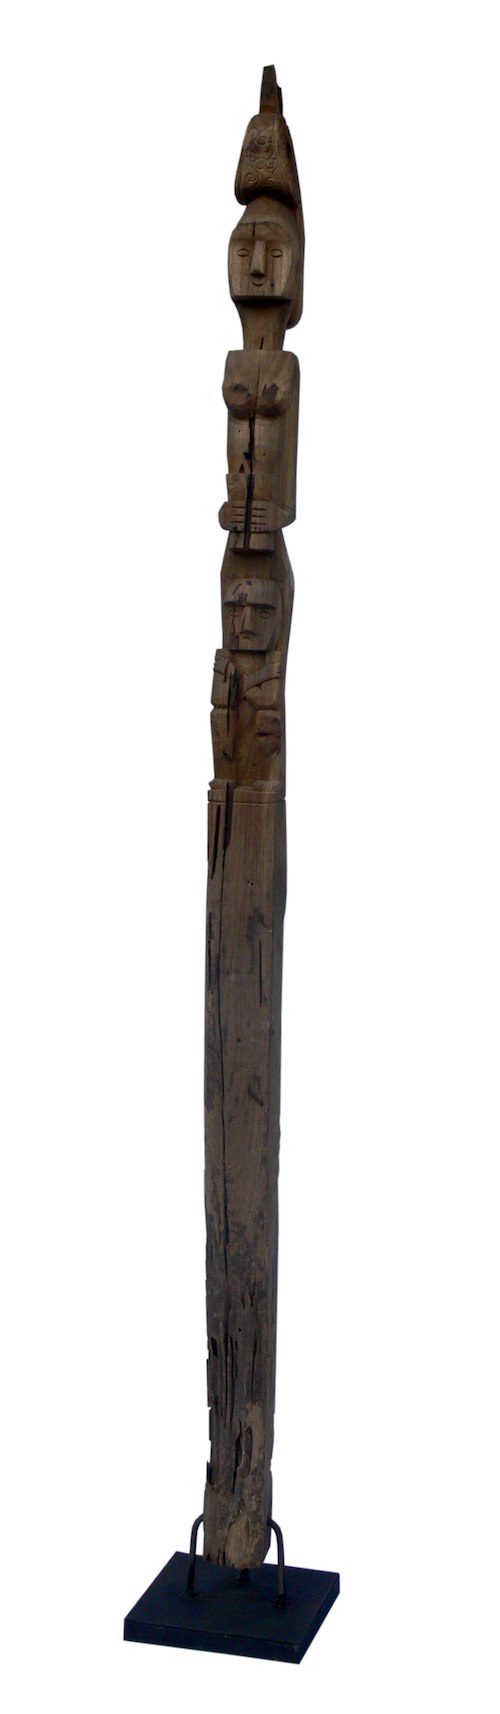 80018 Totem Stand I(M) (20x20x170 cm)